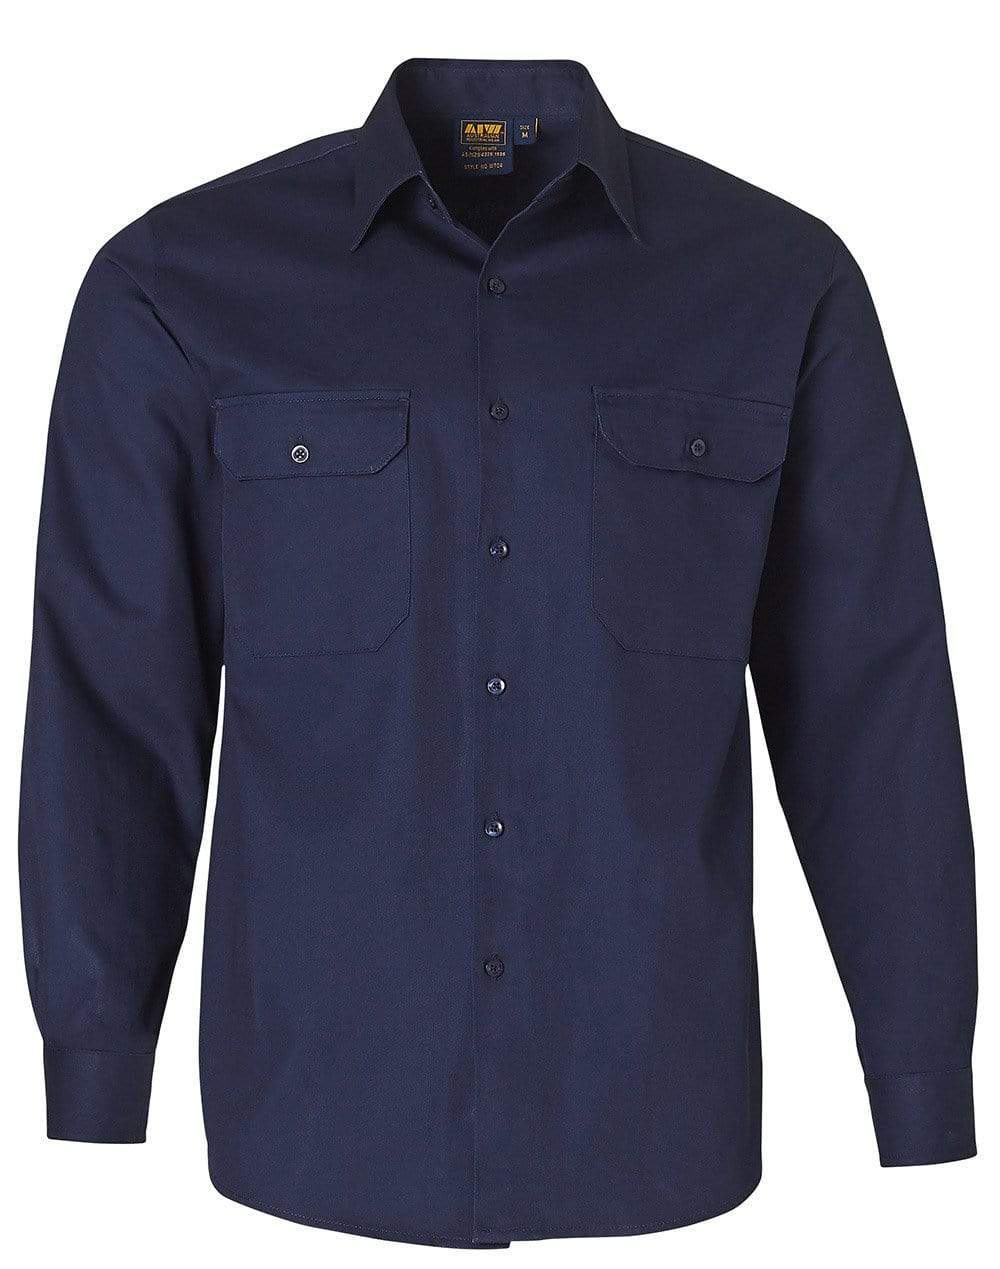 Australian Industrial Wear Work Wear Navy / S COTTON DRILL work shirt WT04